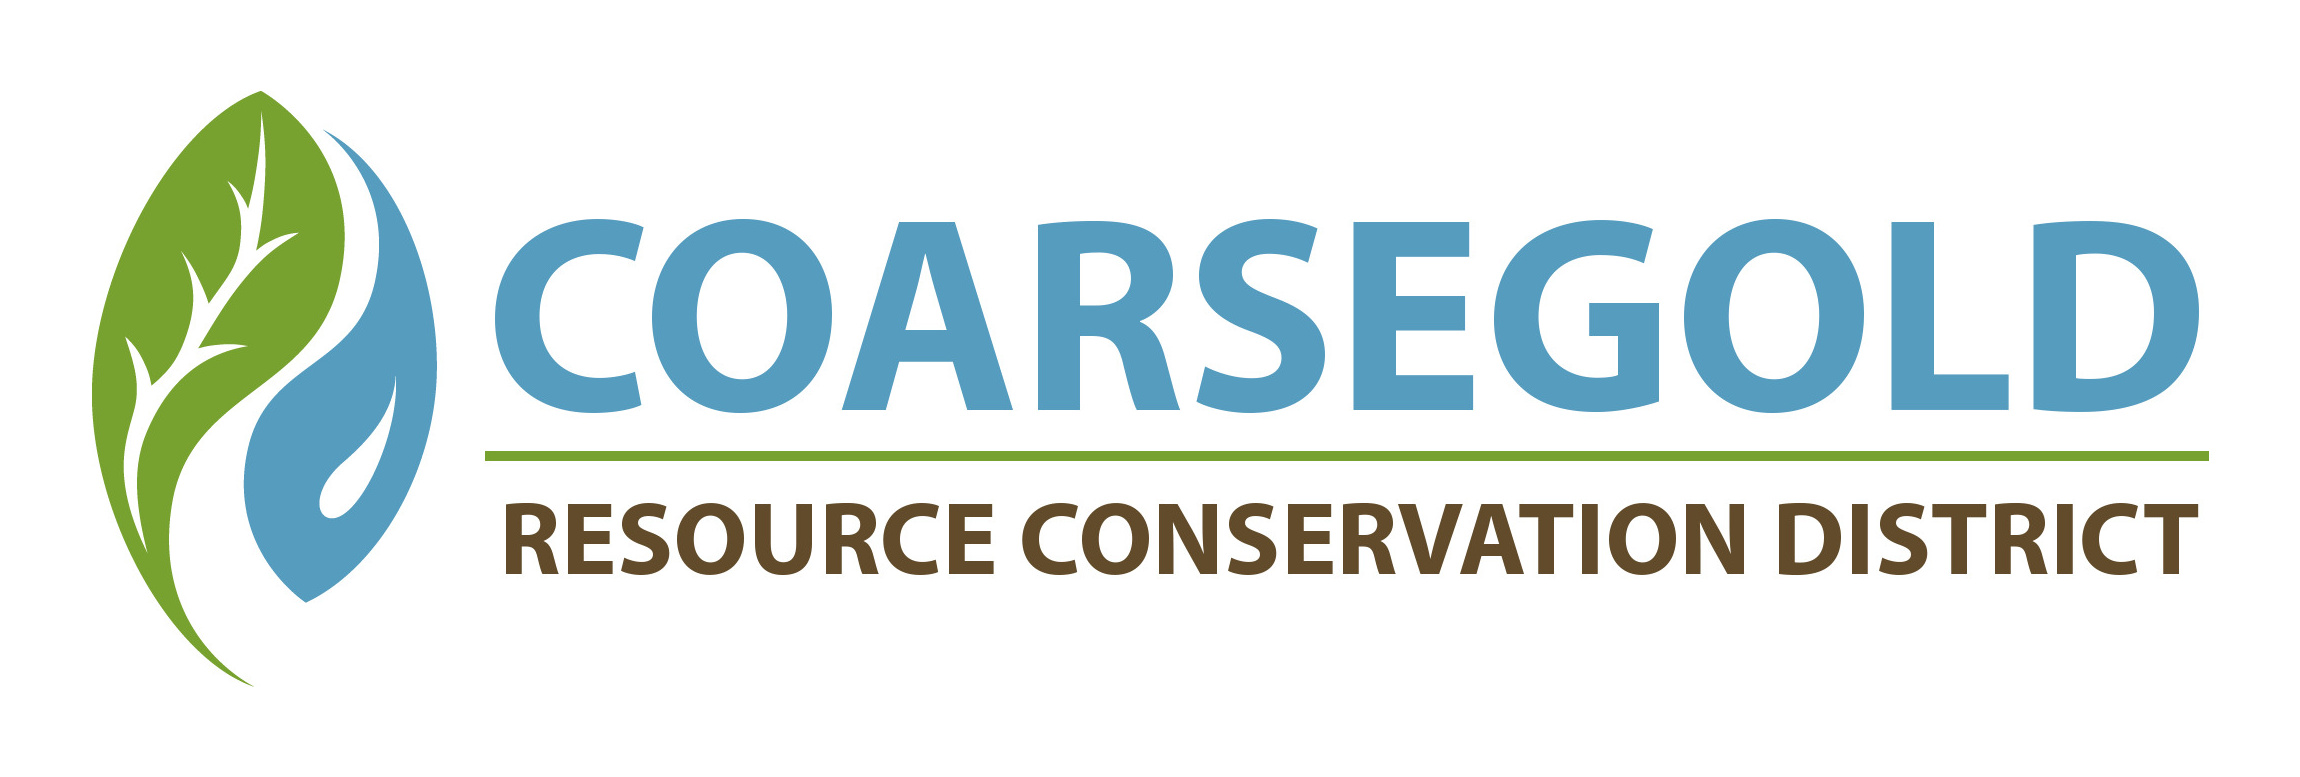 Coarsegold Resource Conservation District Logo